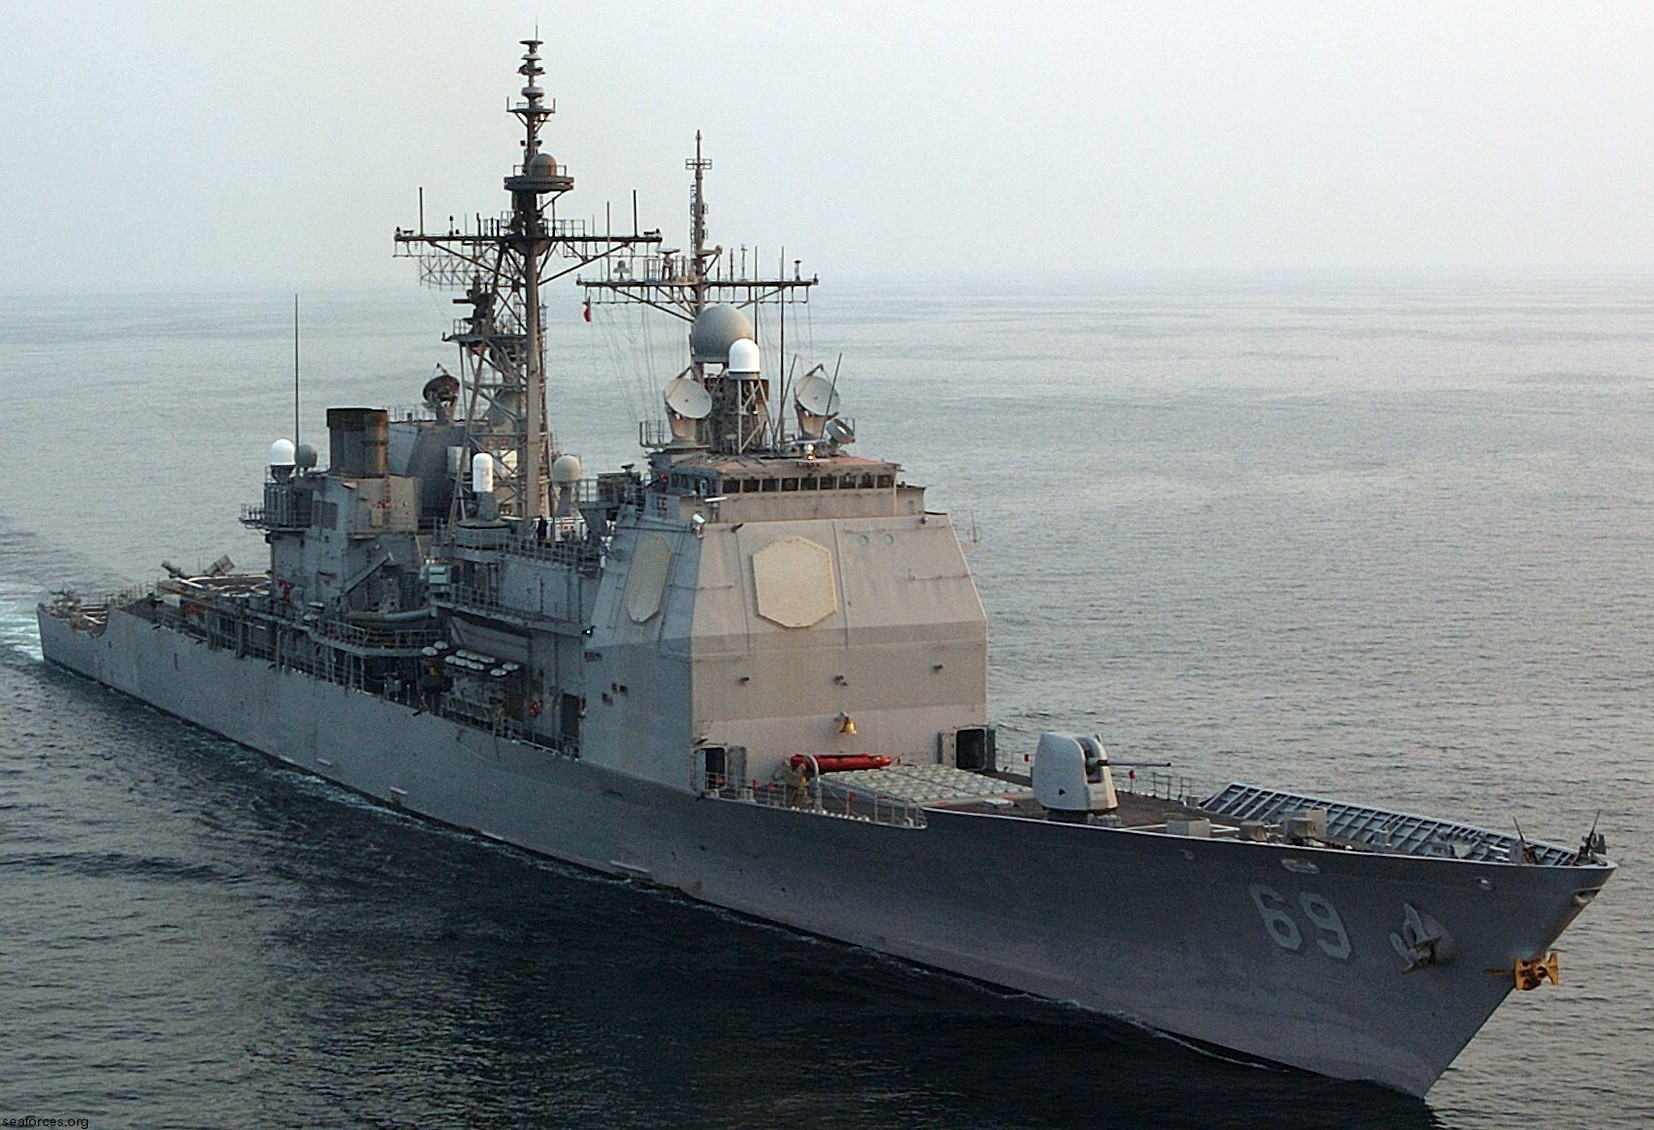 cg-69 uss vicksburg ticonderoga class guided missile cruiser us navy ingalls shipbuilding pascagoula mississippi 37x